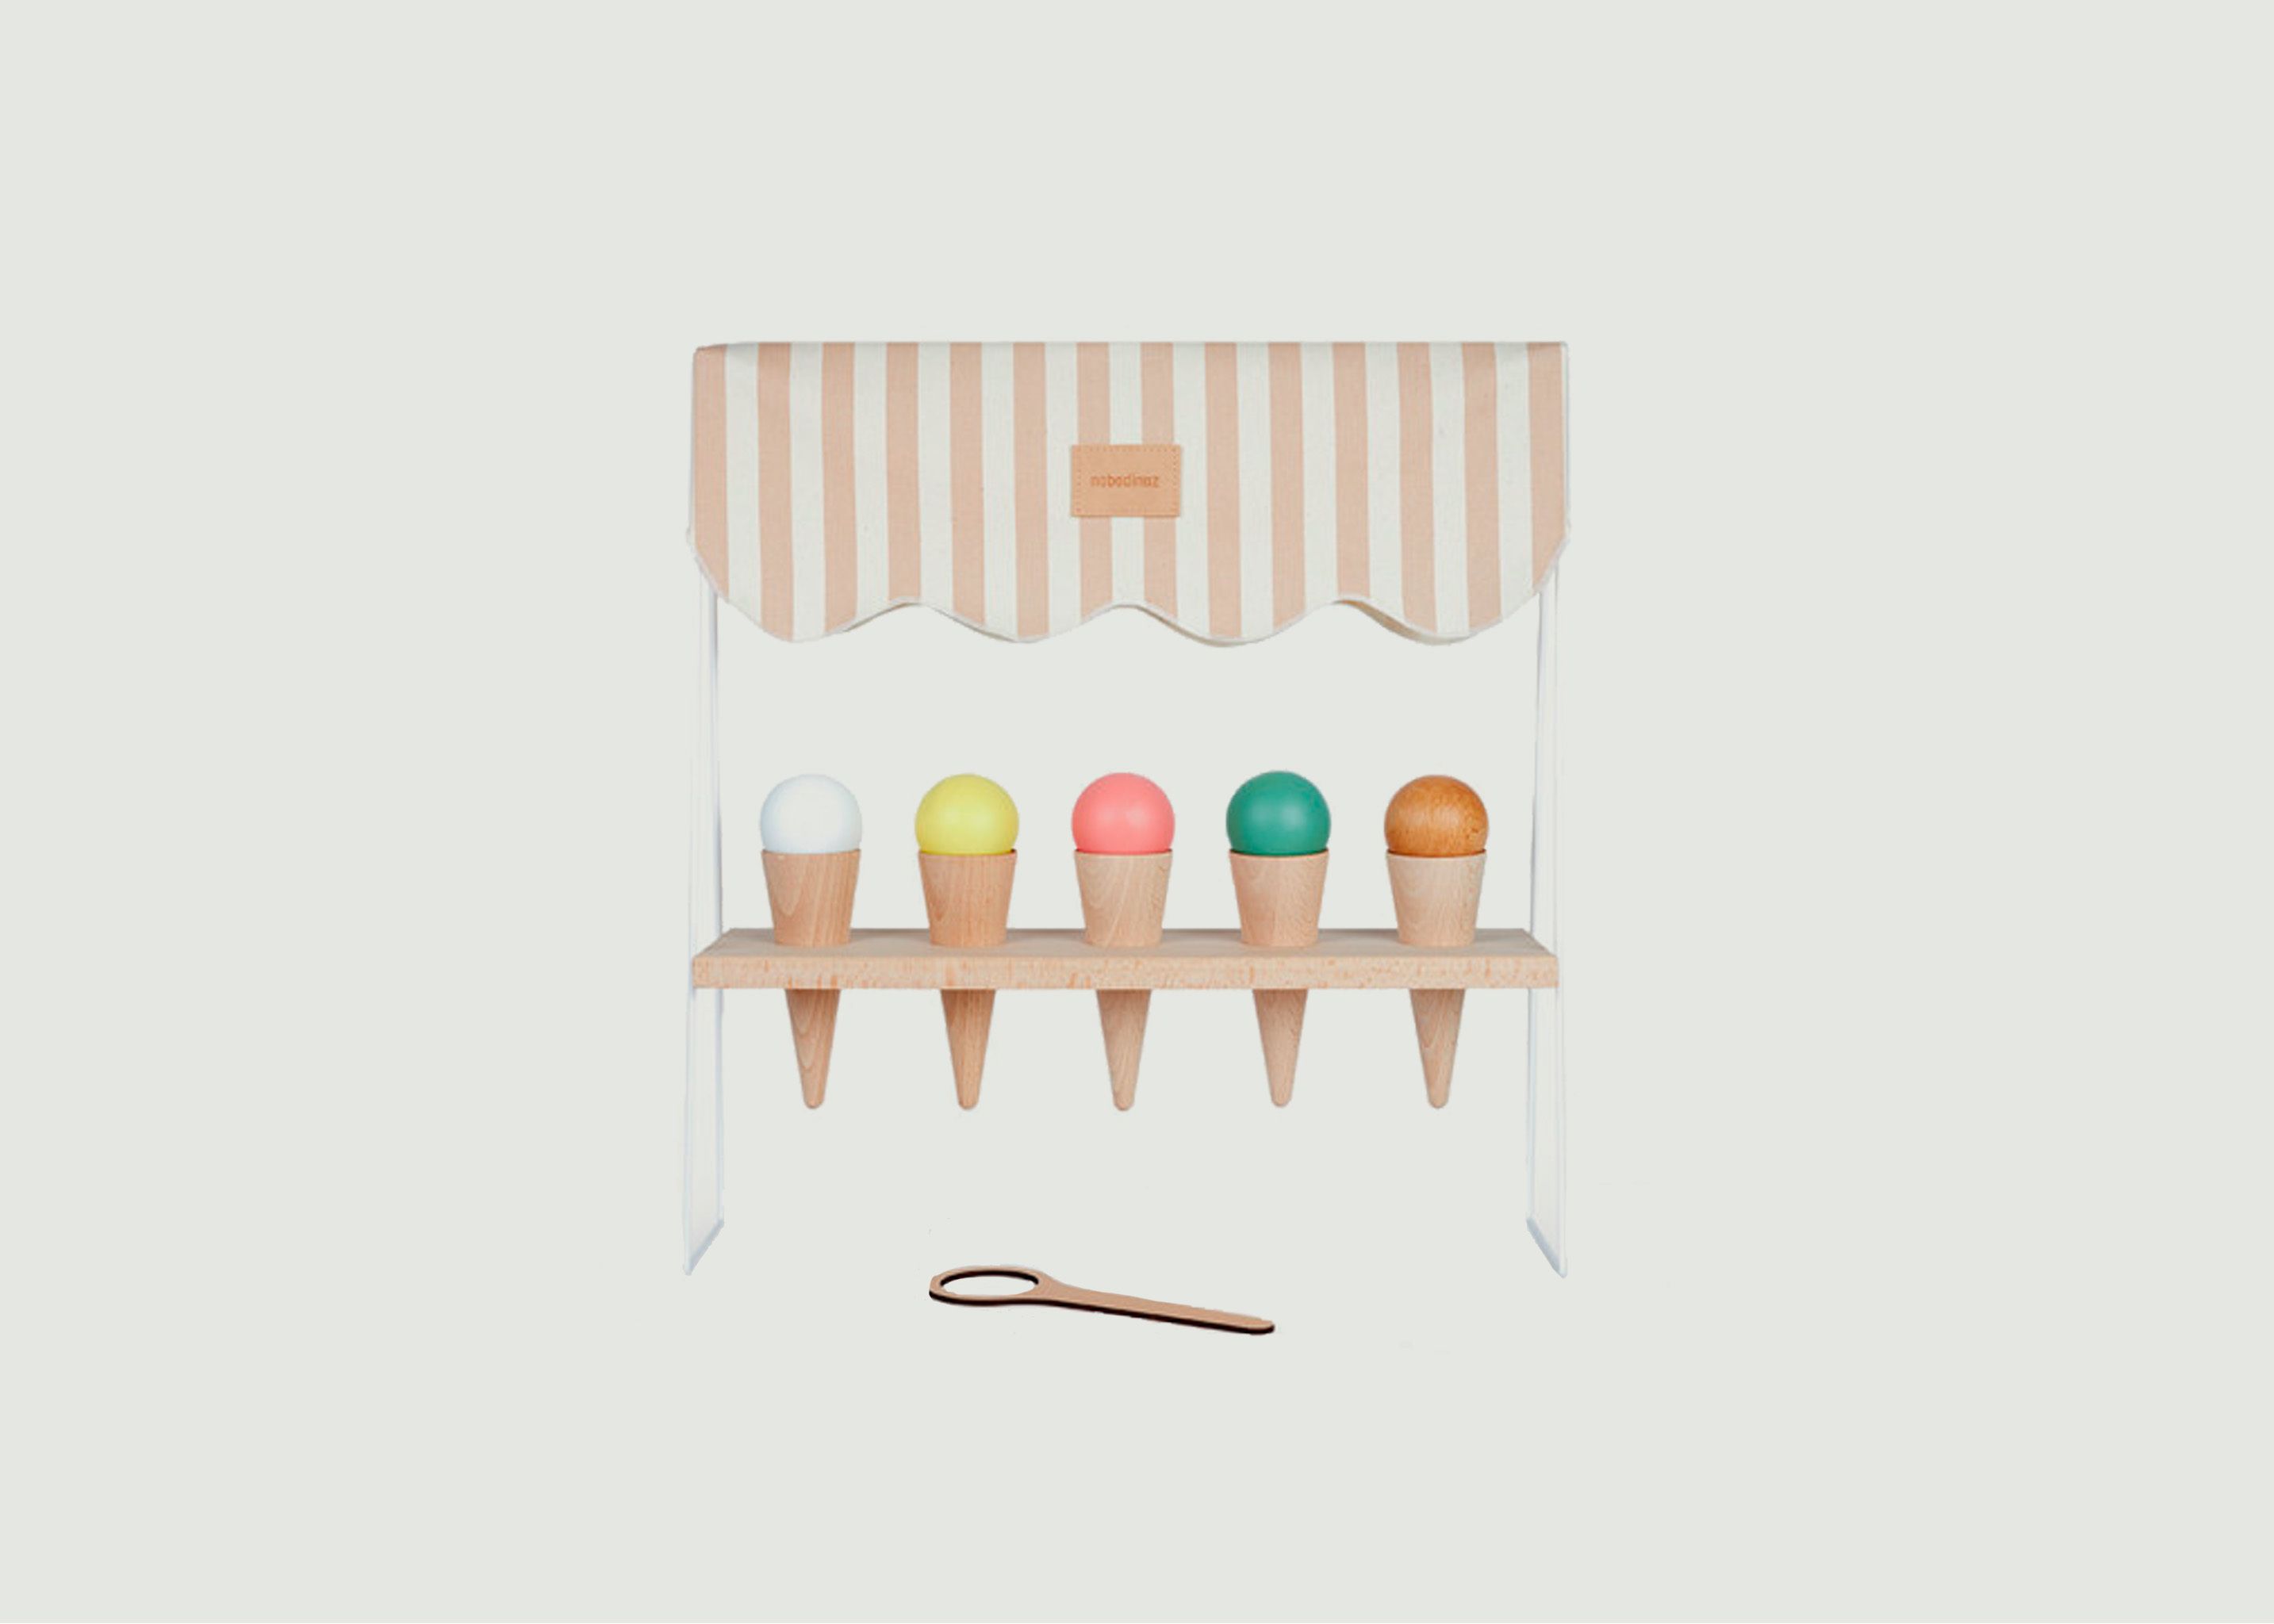 Wooden ice cream maker - Nobodinoz